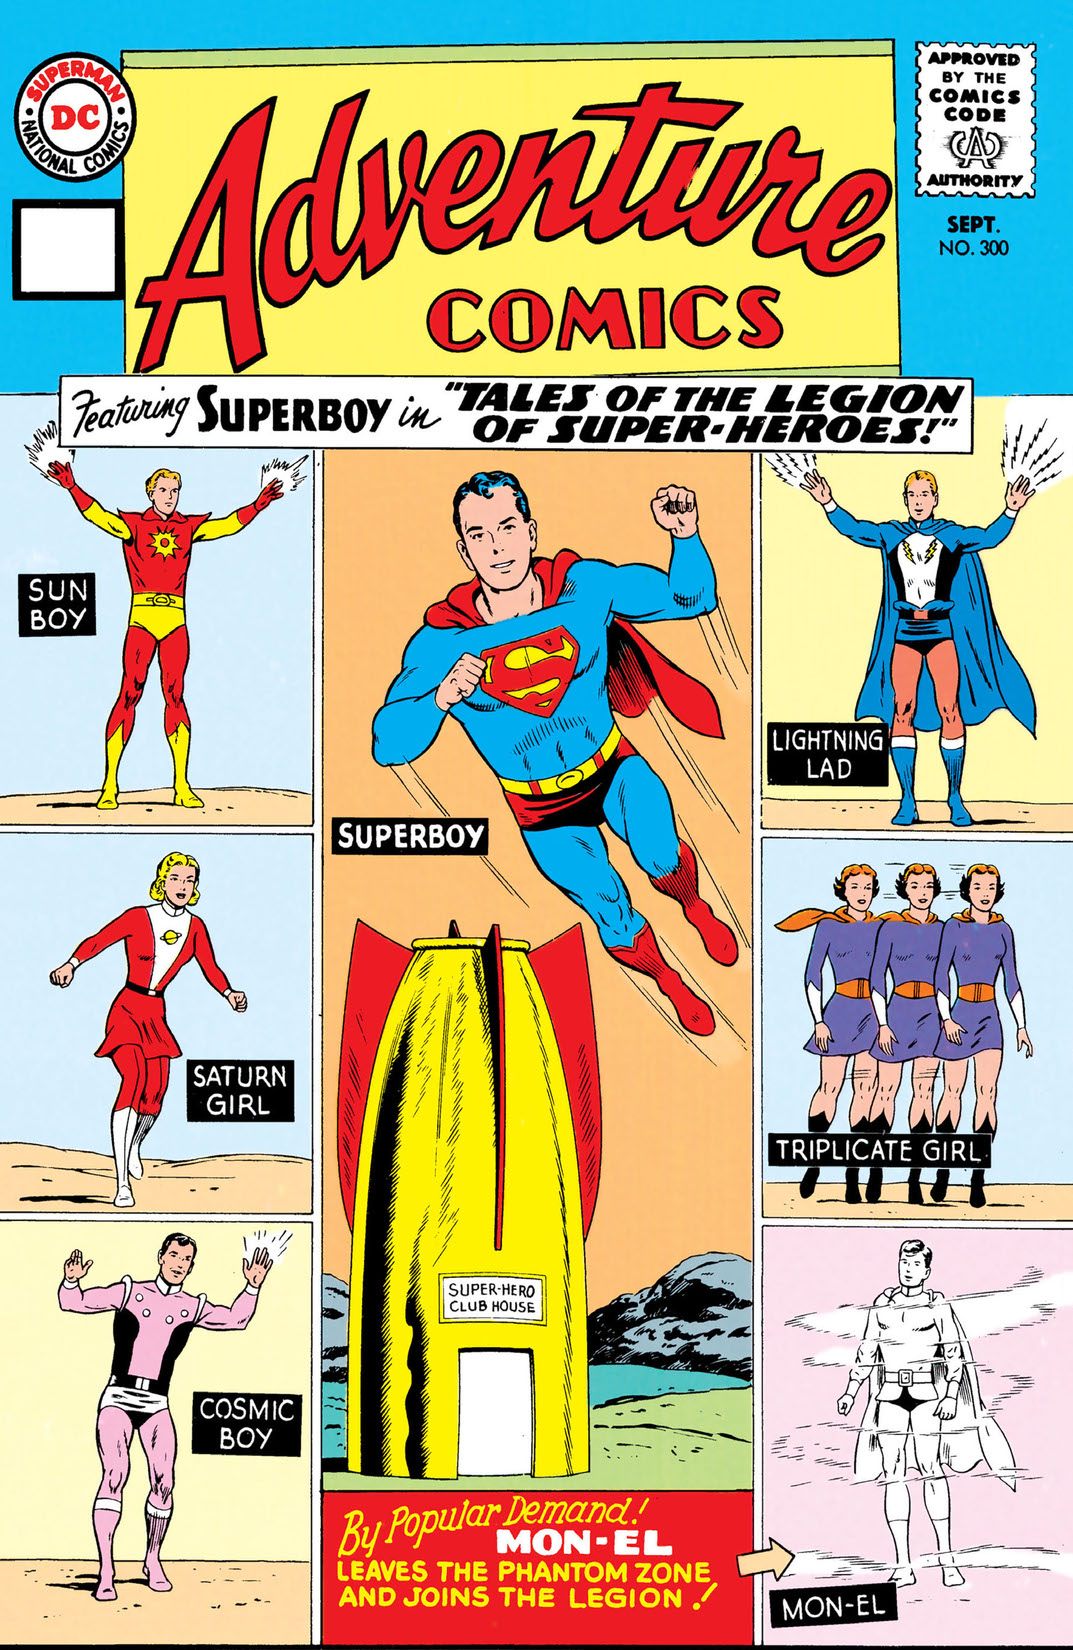 Adventure Comics (1938-) #300 preview images